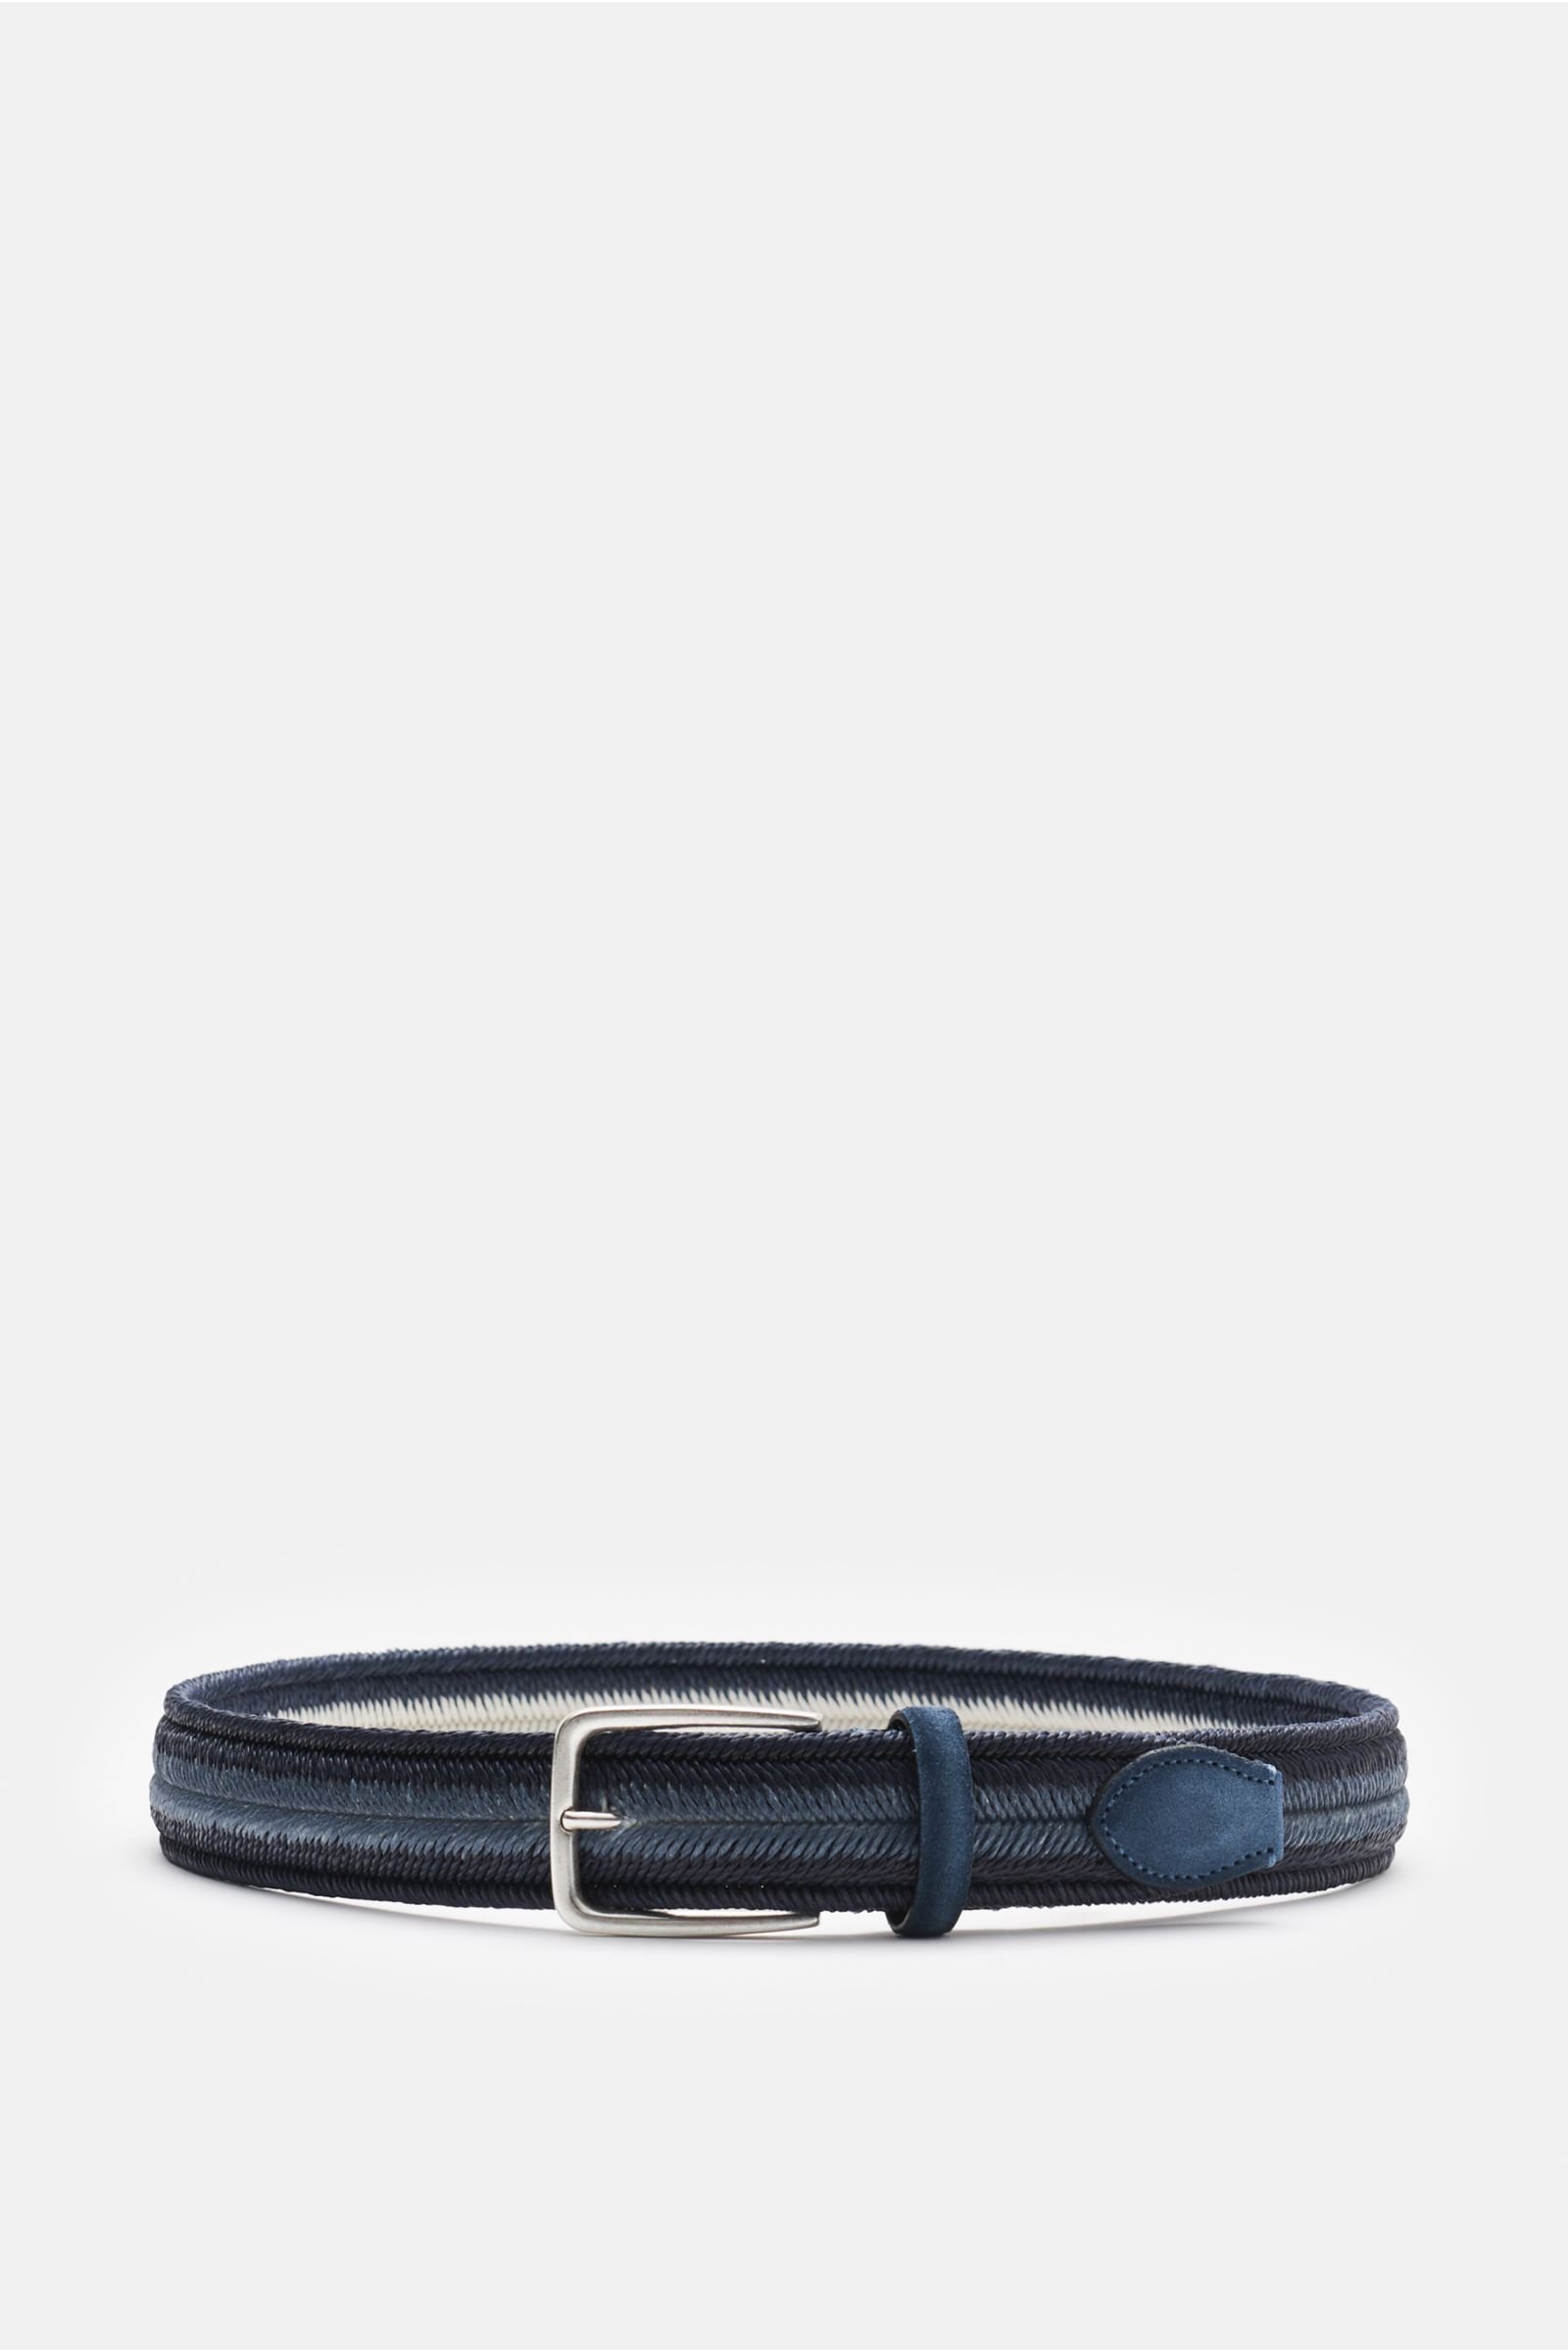 Plaited belt dark navy/smoky blue 